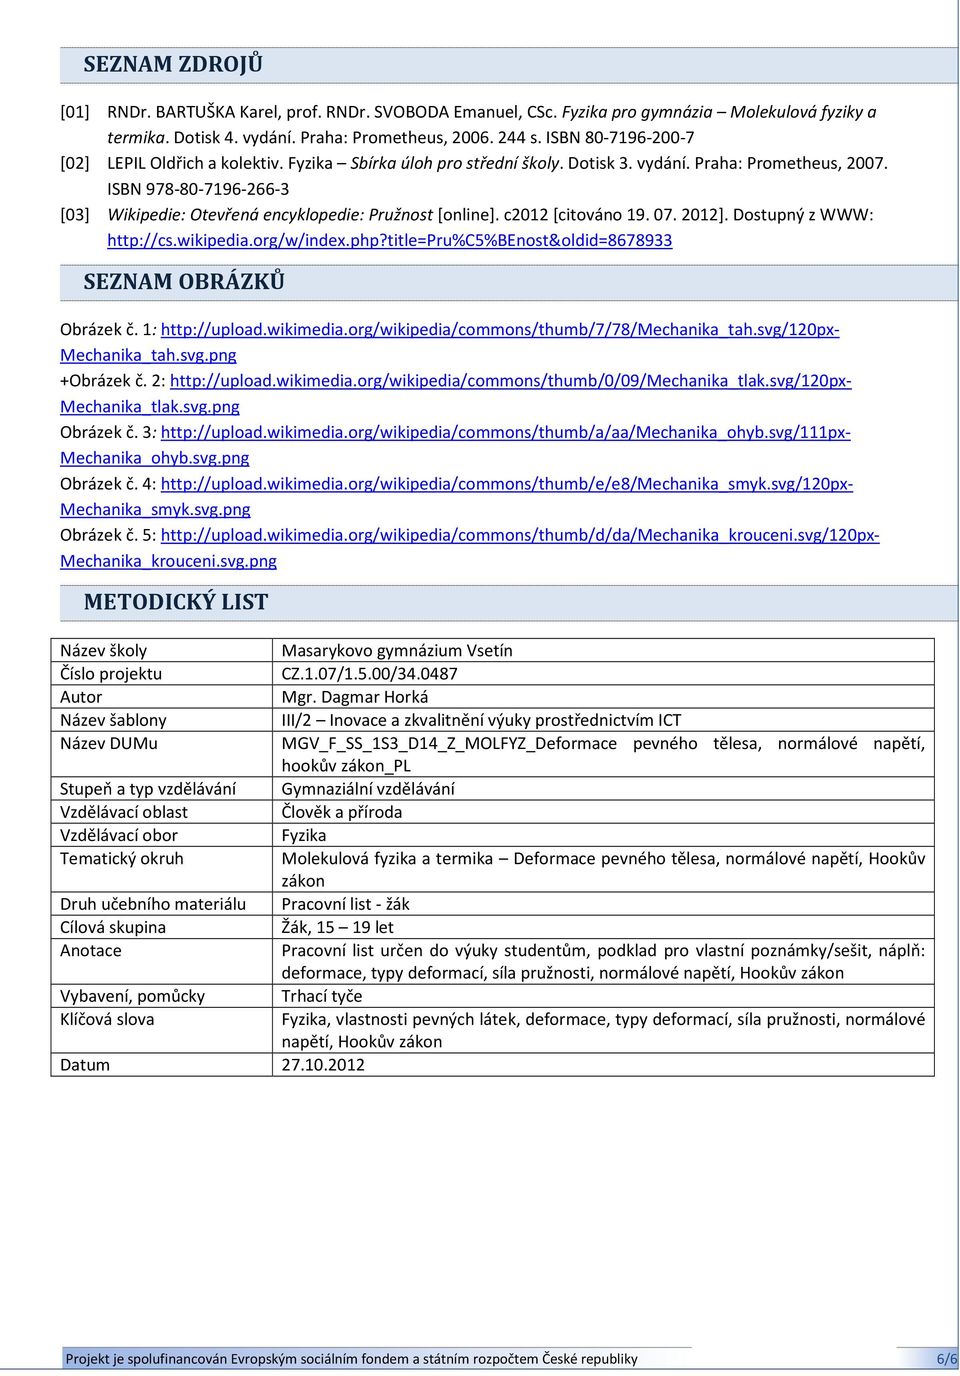 ISBN 9788071962663 [03] Wikipedie: Otevřená encyklopedie: Pružnost [online]. c2012 [citováno 19. 07. 2012]. Dostupný z WWW: http://cs.wikipedia.org/w/index.php?